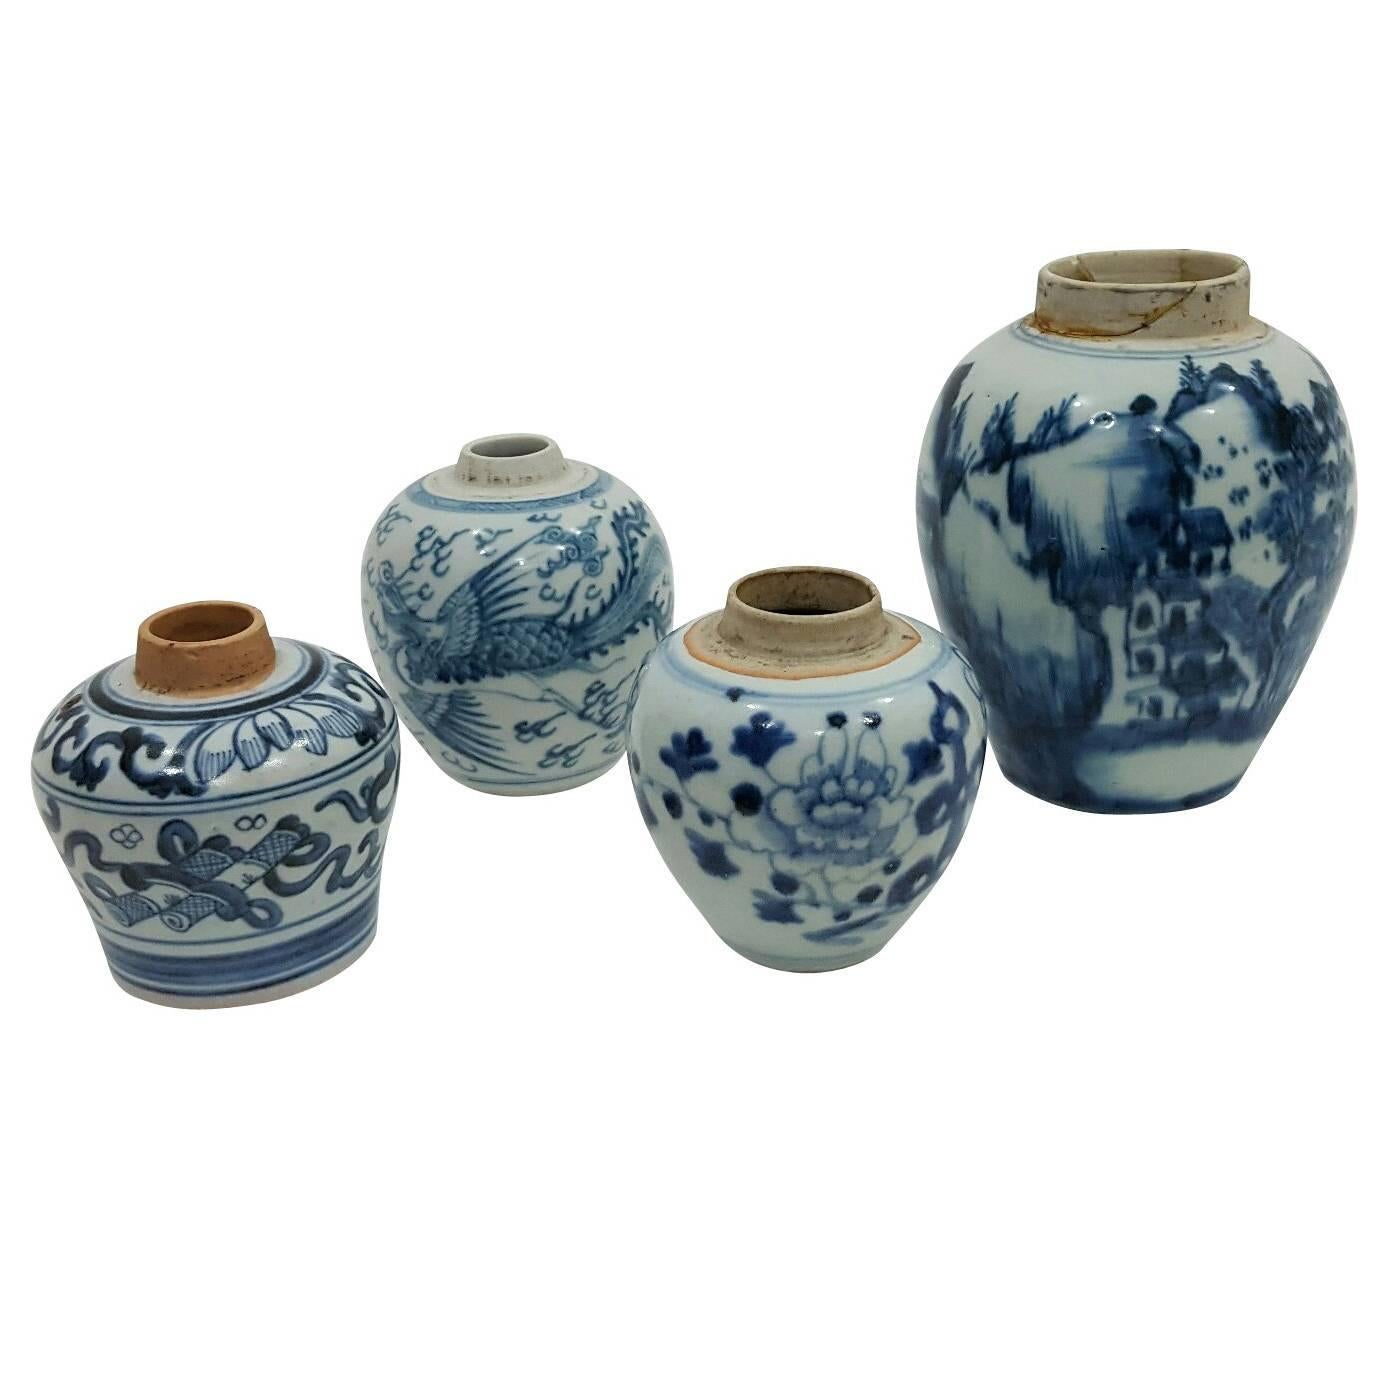 19th Century Set of Four Antique Chinese Ceramic Pots